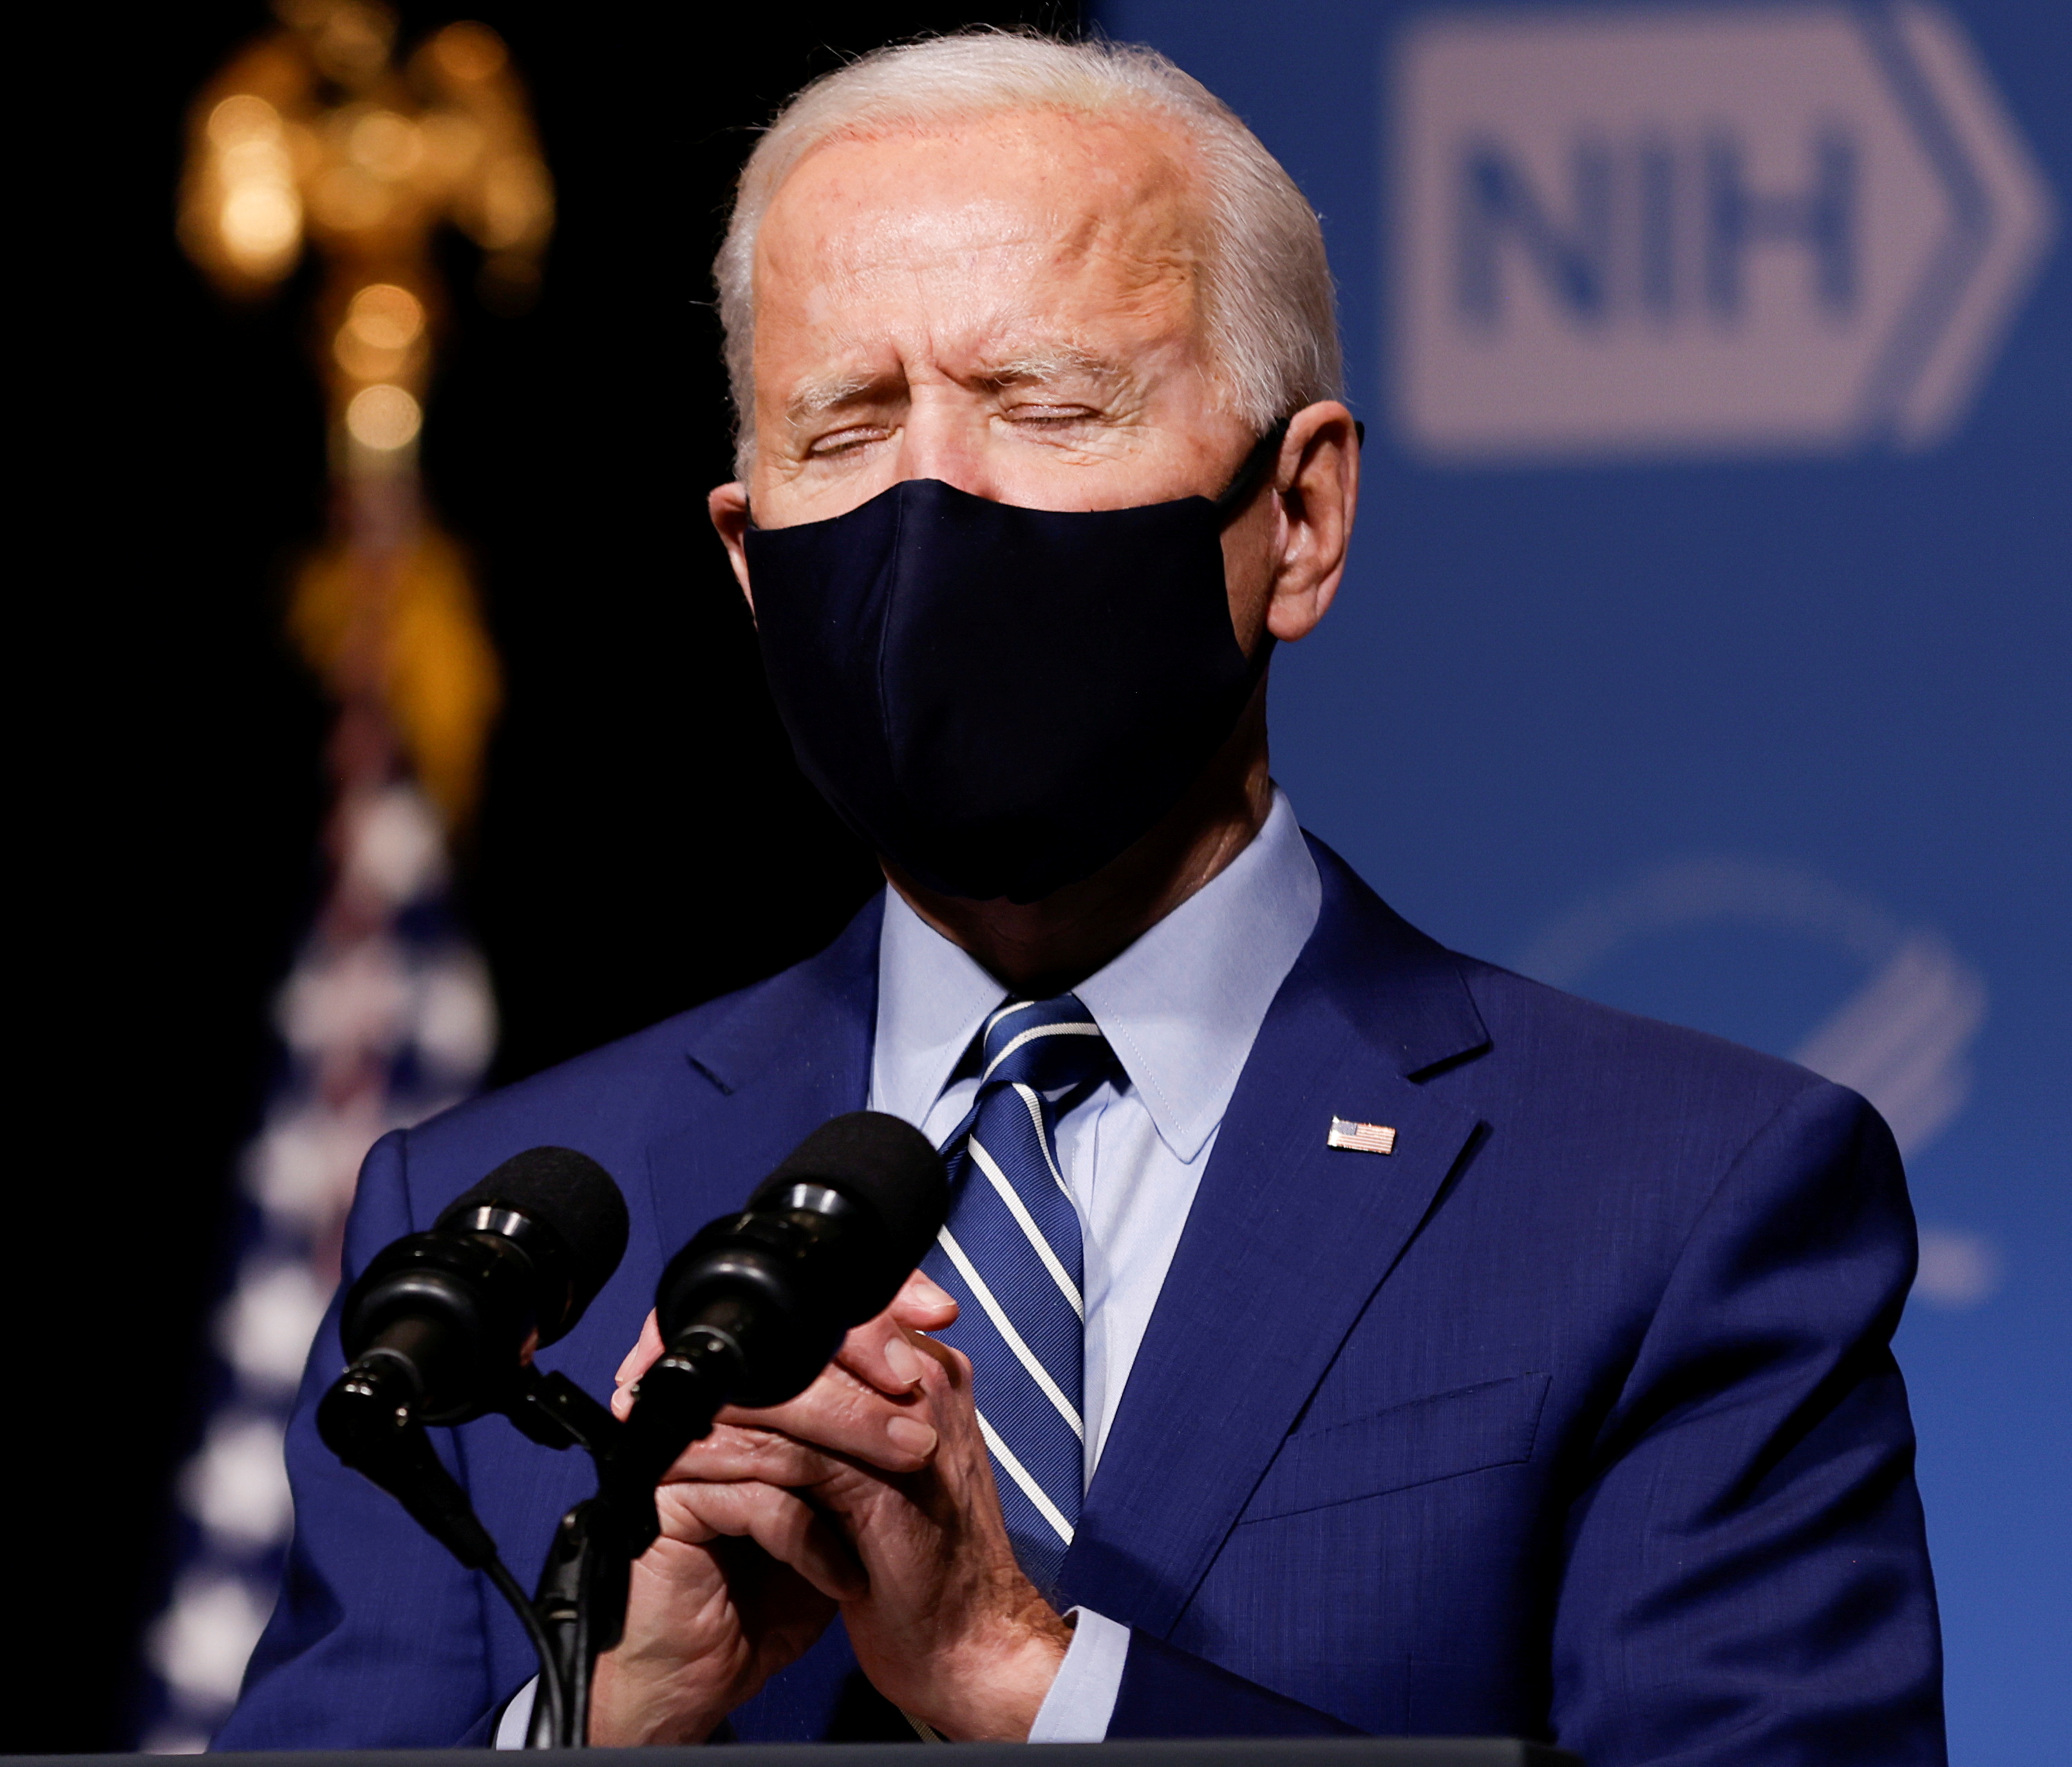 U.S. President Joe Biden visits the National Institutes of Health (NIH) in Bethesda, Maryland